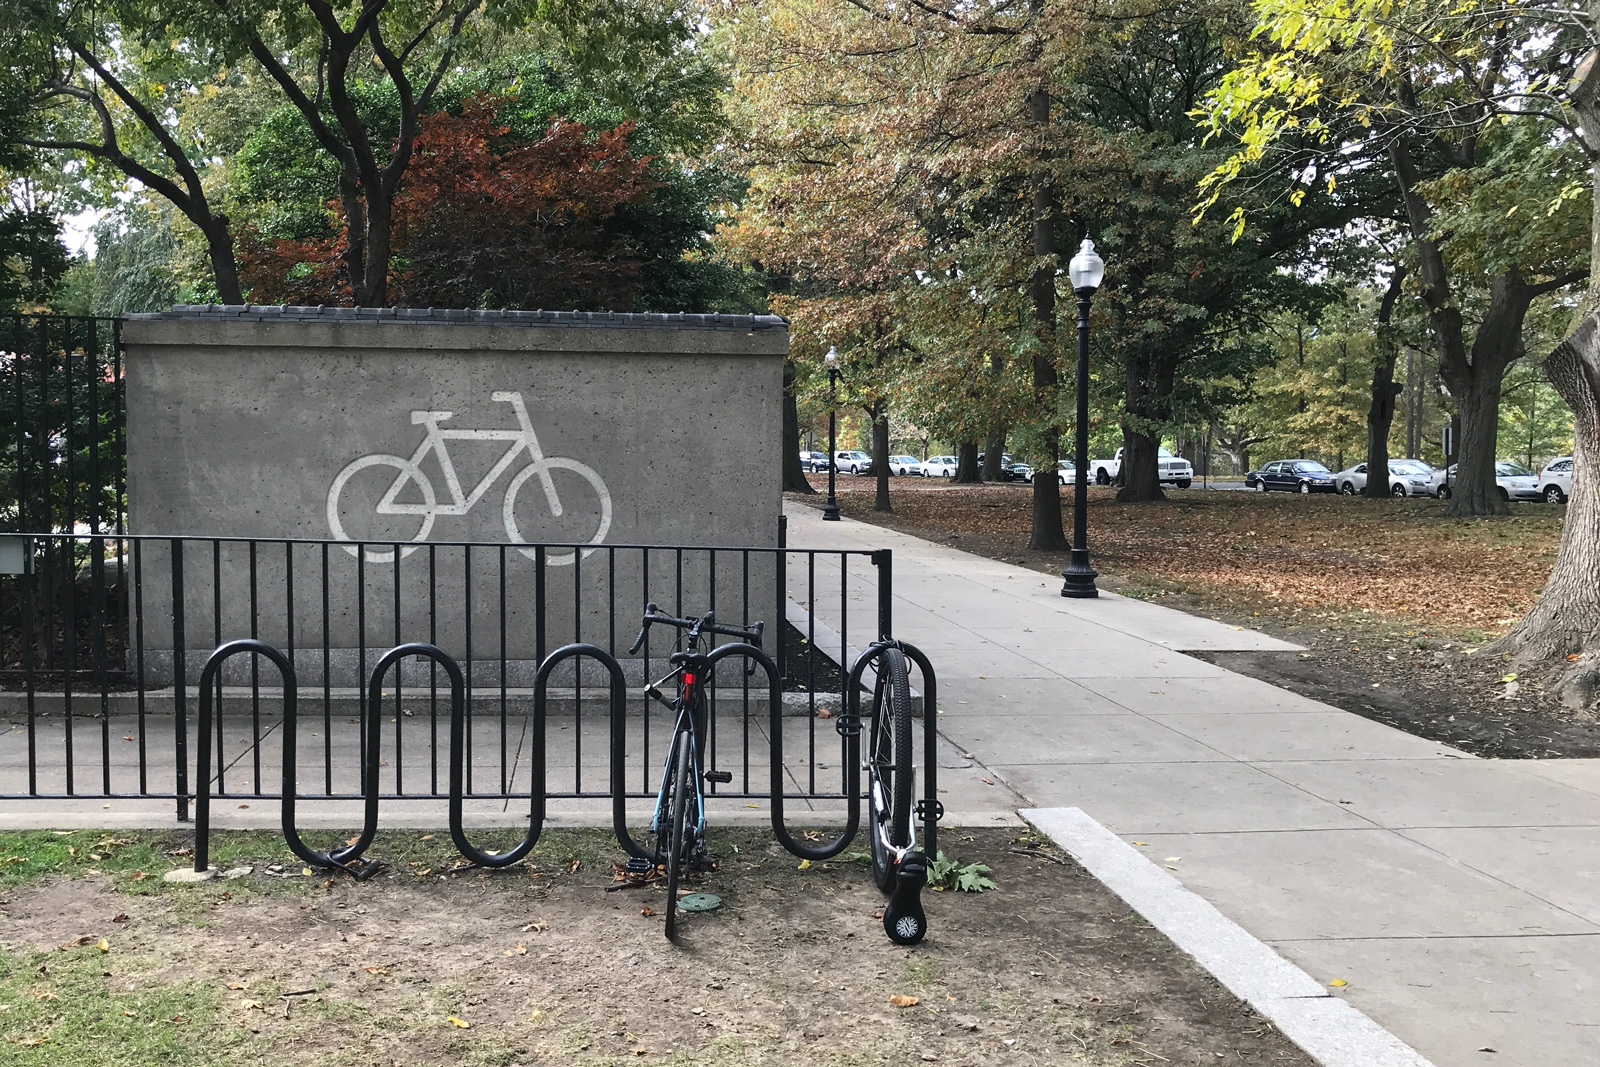 Bike parking signage